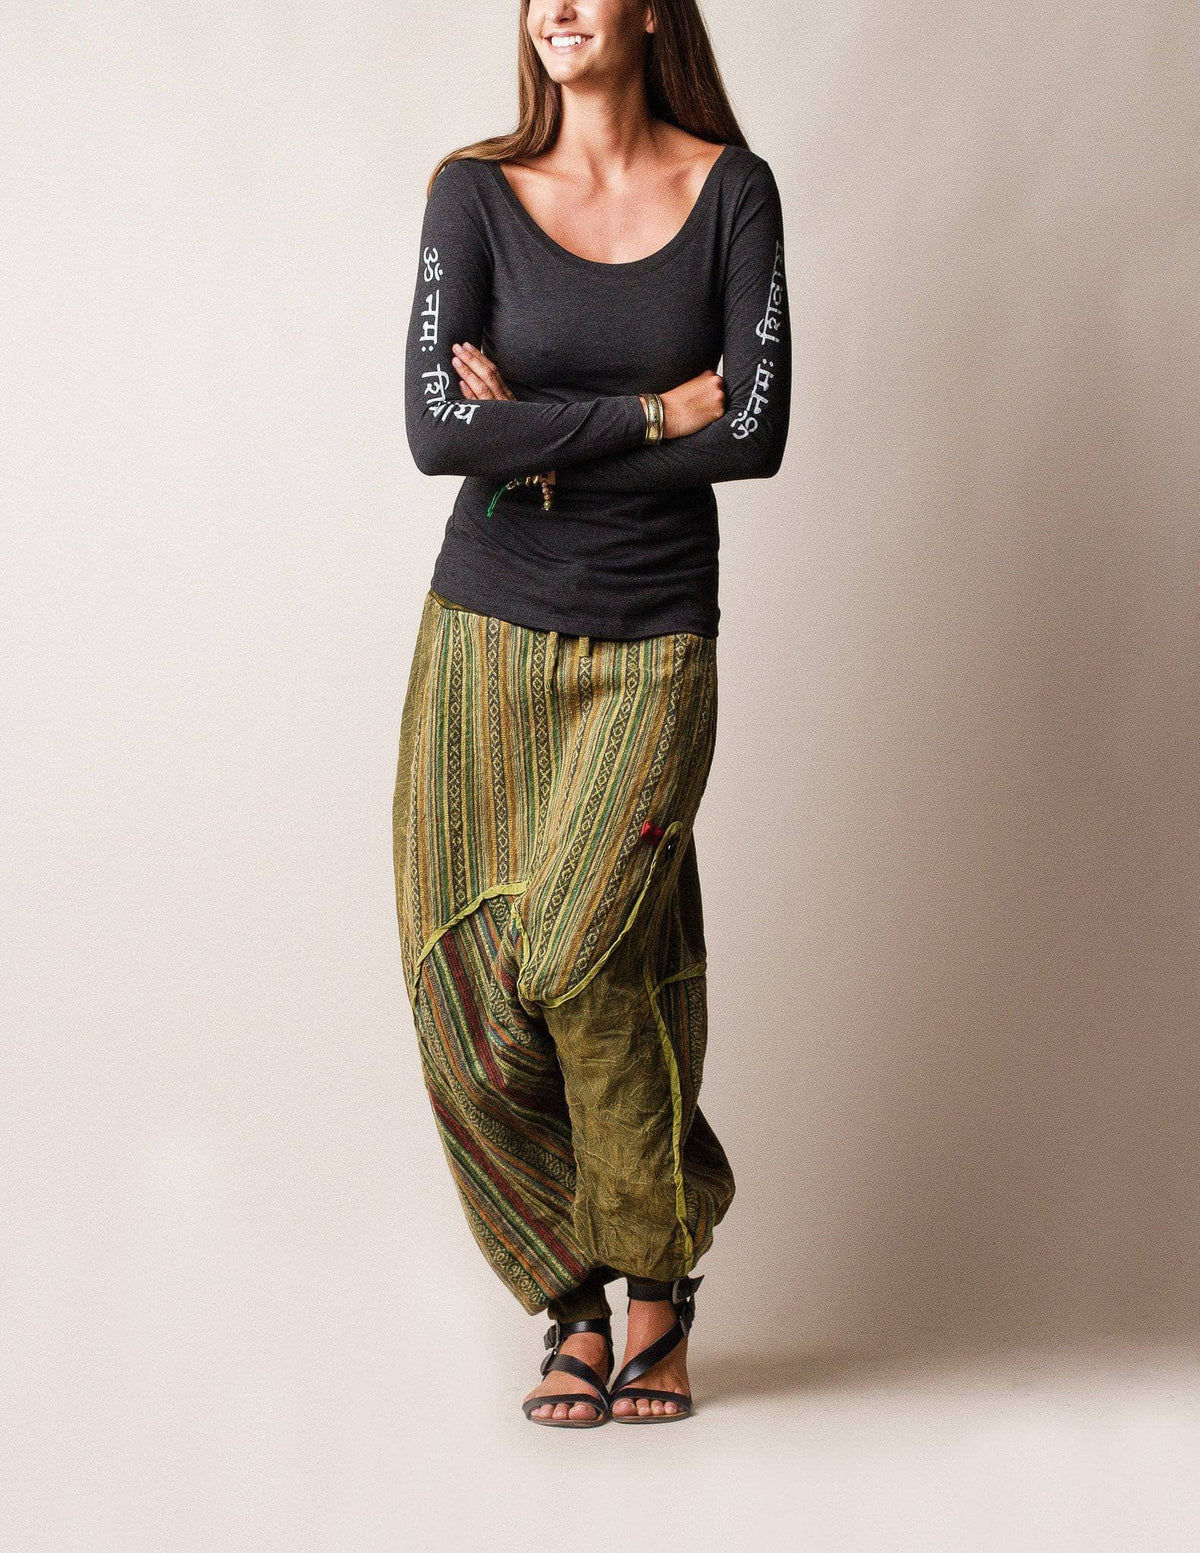 Unisex Loose Fit Harem Pants (PT_32_Multicolour_Free Size) : Amazon.in:  Fashion